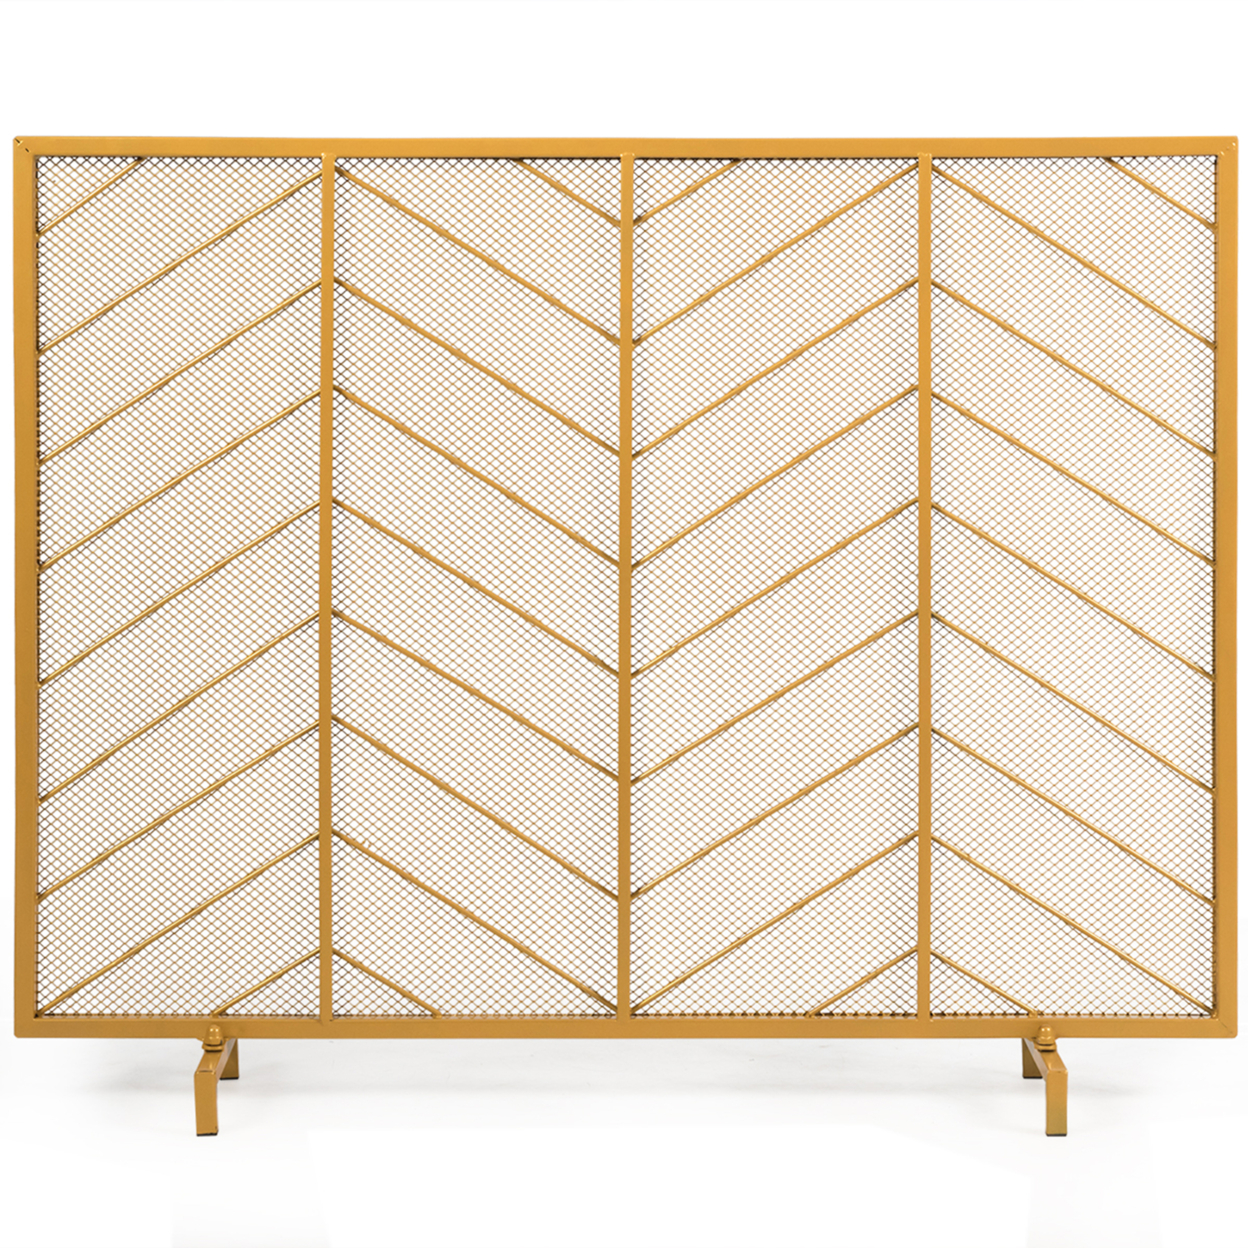 39''x31'' Single Panel Fireplace Screen Spark Guard Fence Chevron Gold Finish